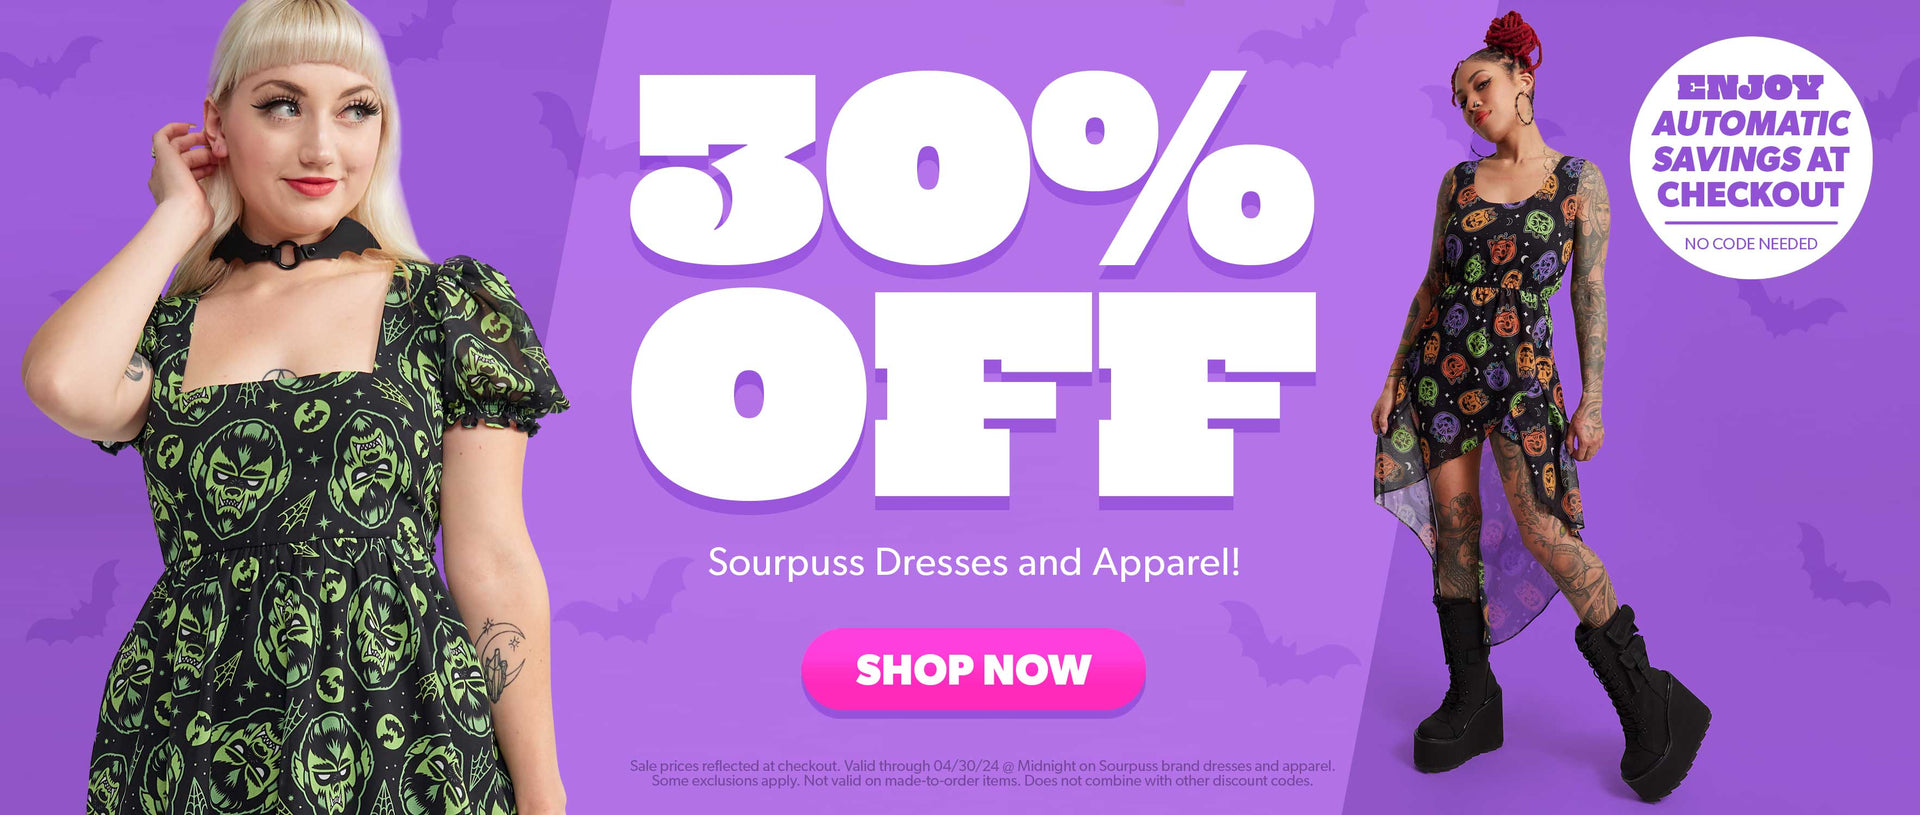 30% off Sourpuss dresses and apparel. No code needed!